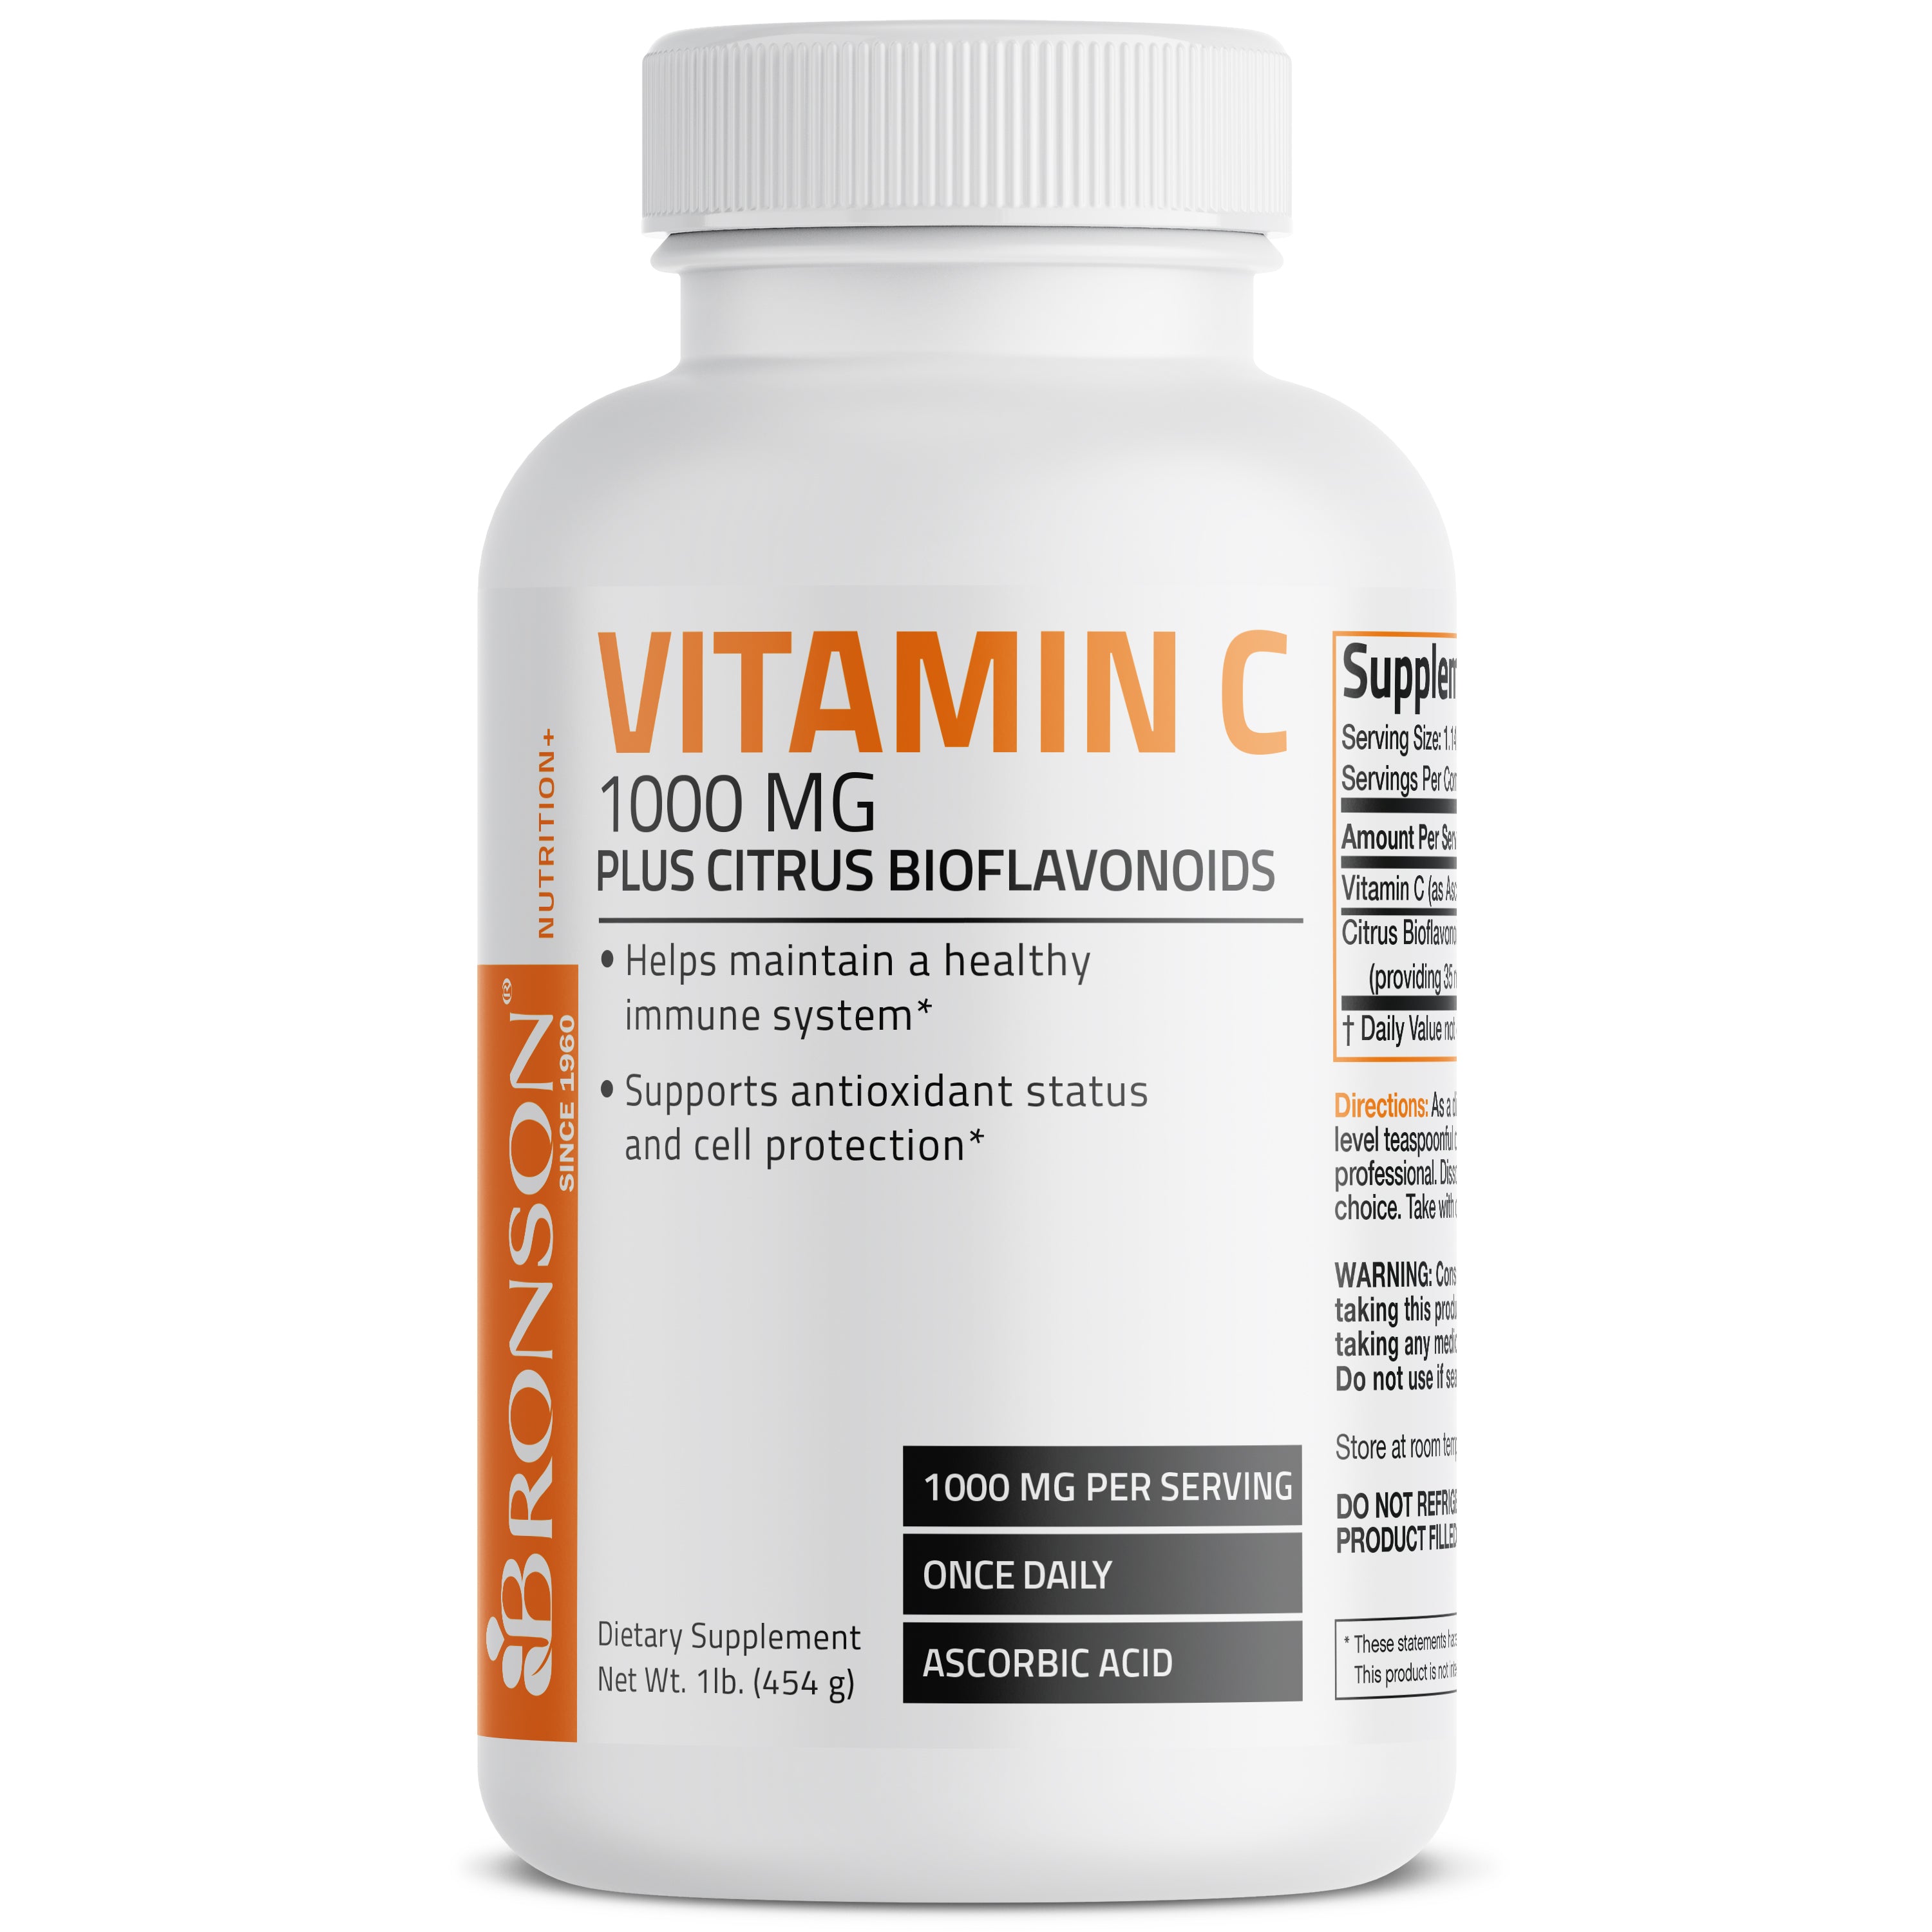 Vitamin C Ascorbic Acid Crystals with Citrus Bioflavonoids - 1,000 mg - 1 lb (454g) view 1 of 4